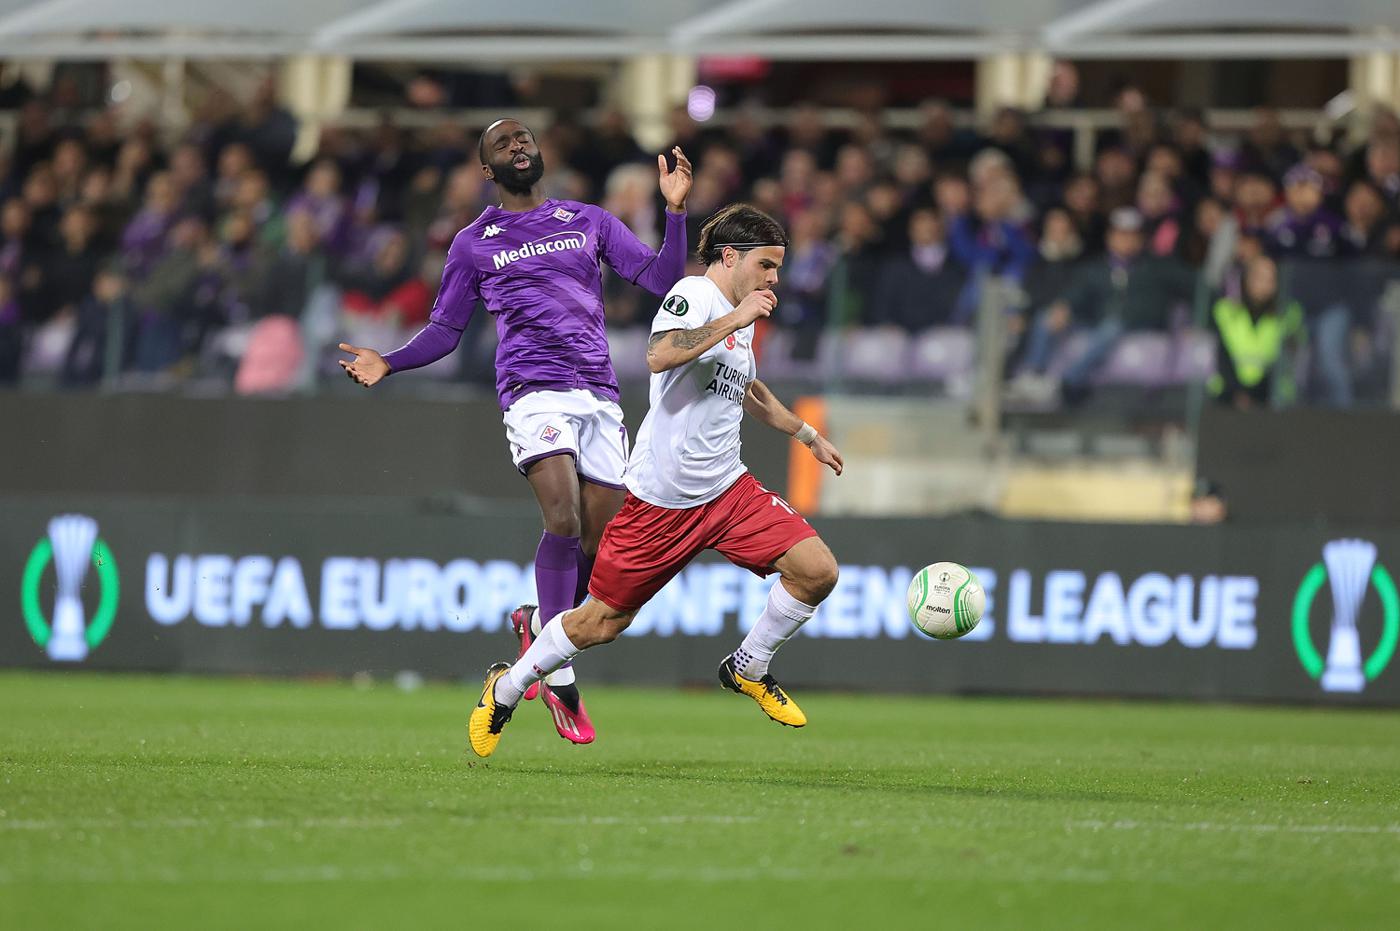 Sivasspor vs Fiorentina - 1:4. Conference League. Review of the match, statistics.